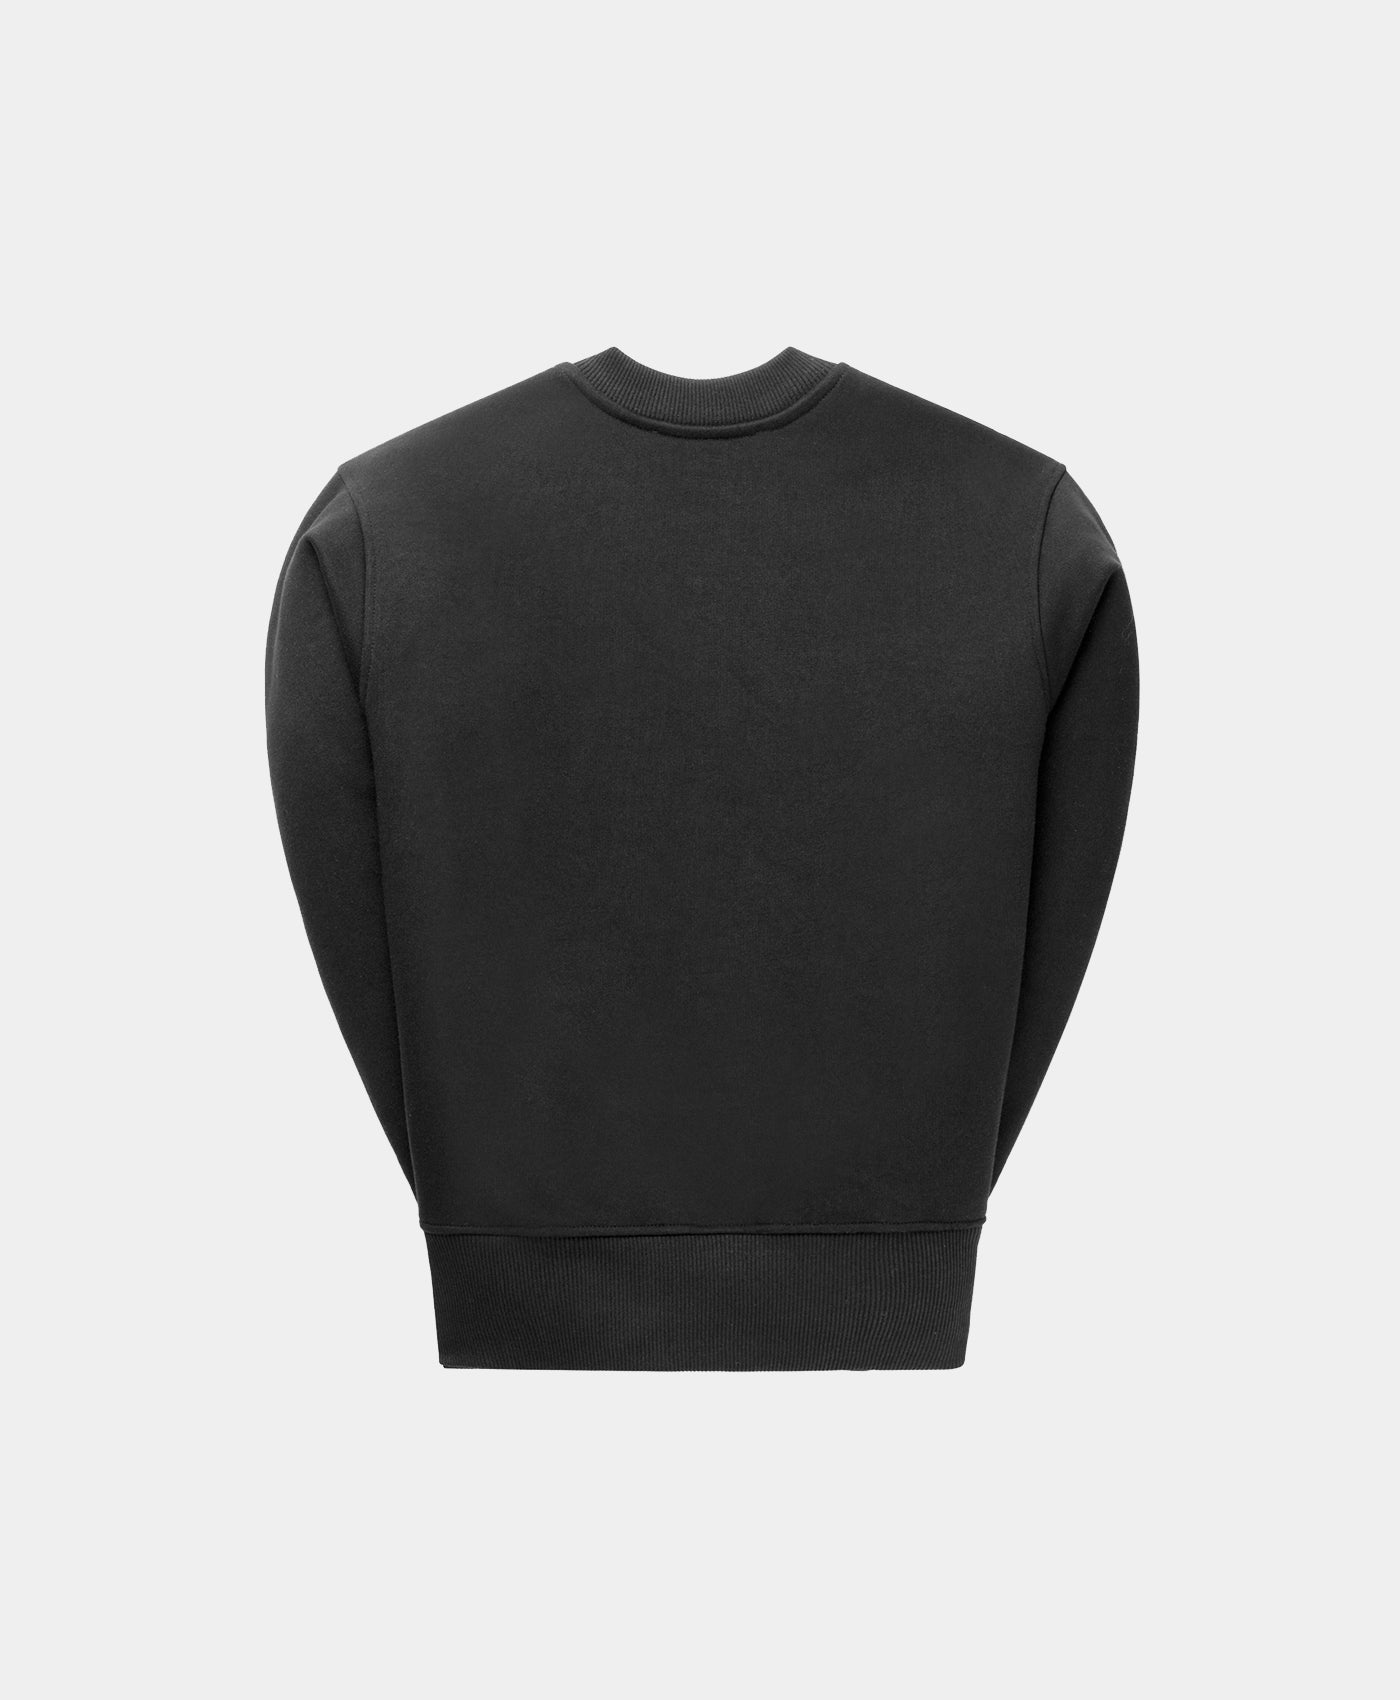 DP - Black Evvie Youth Sweater - Packshot - Rear